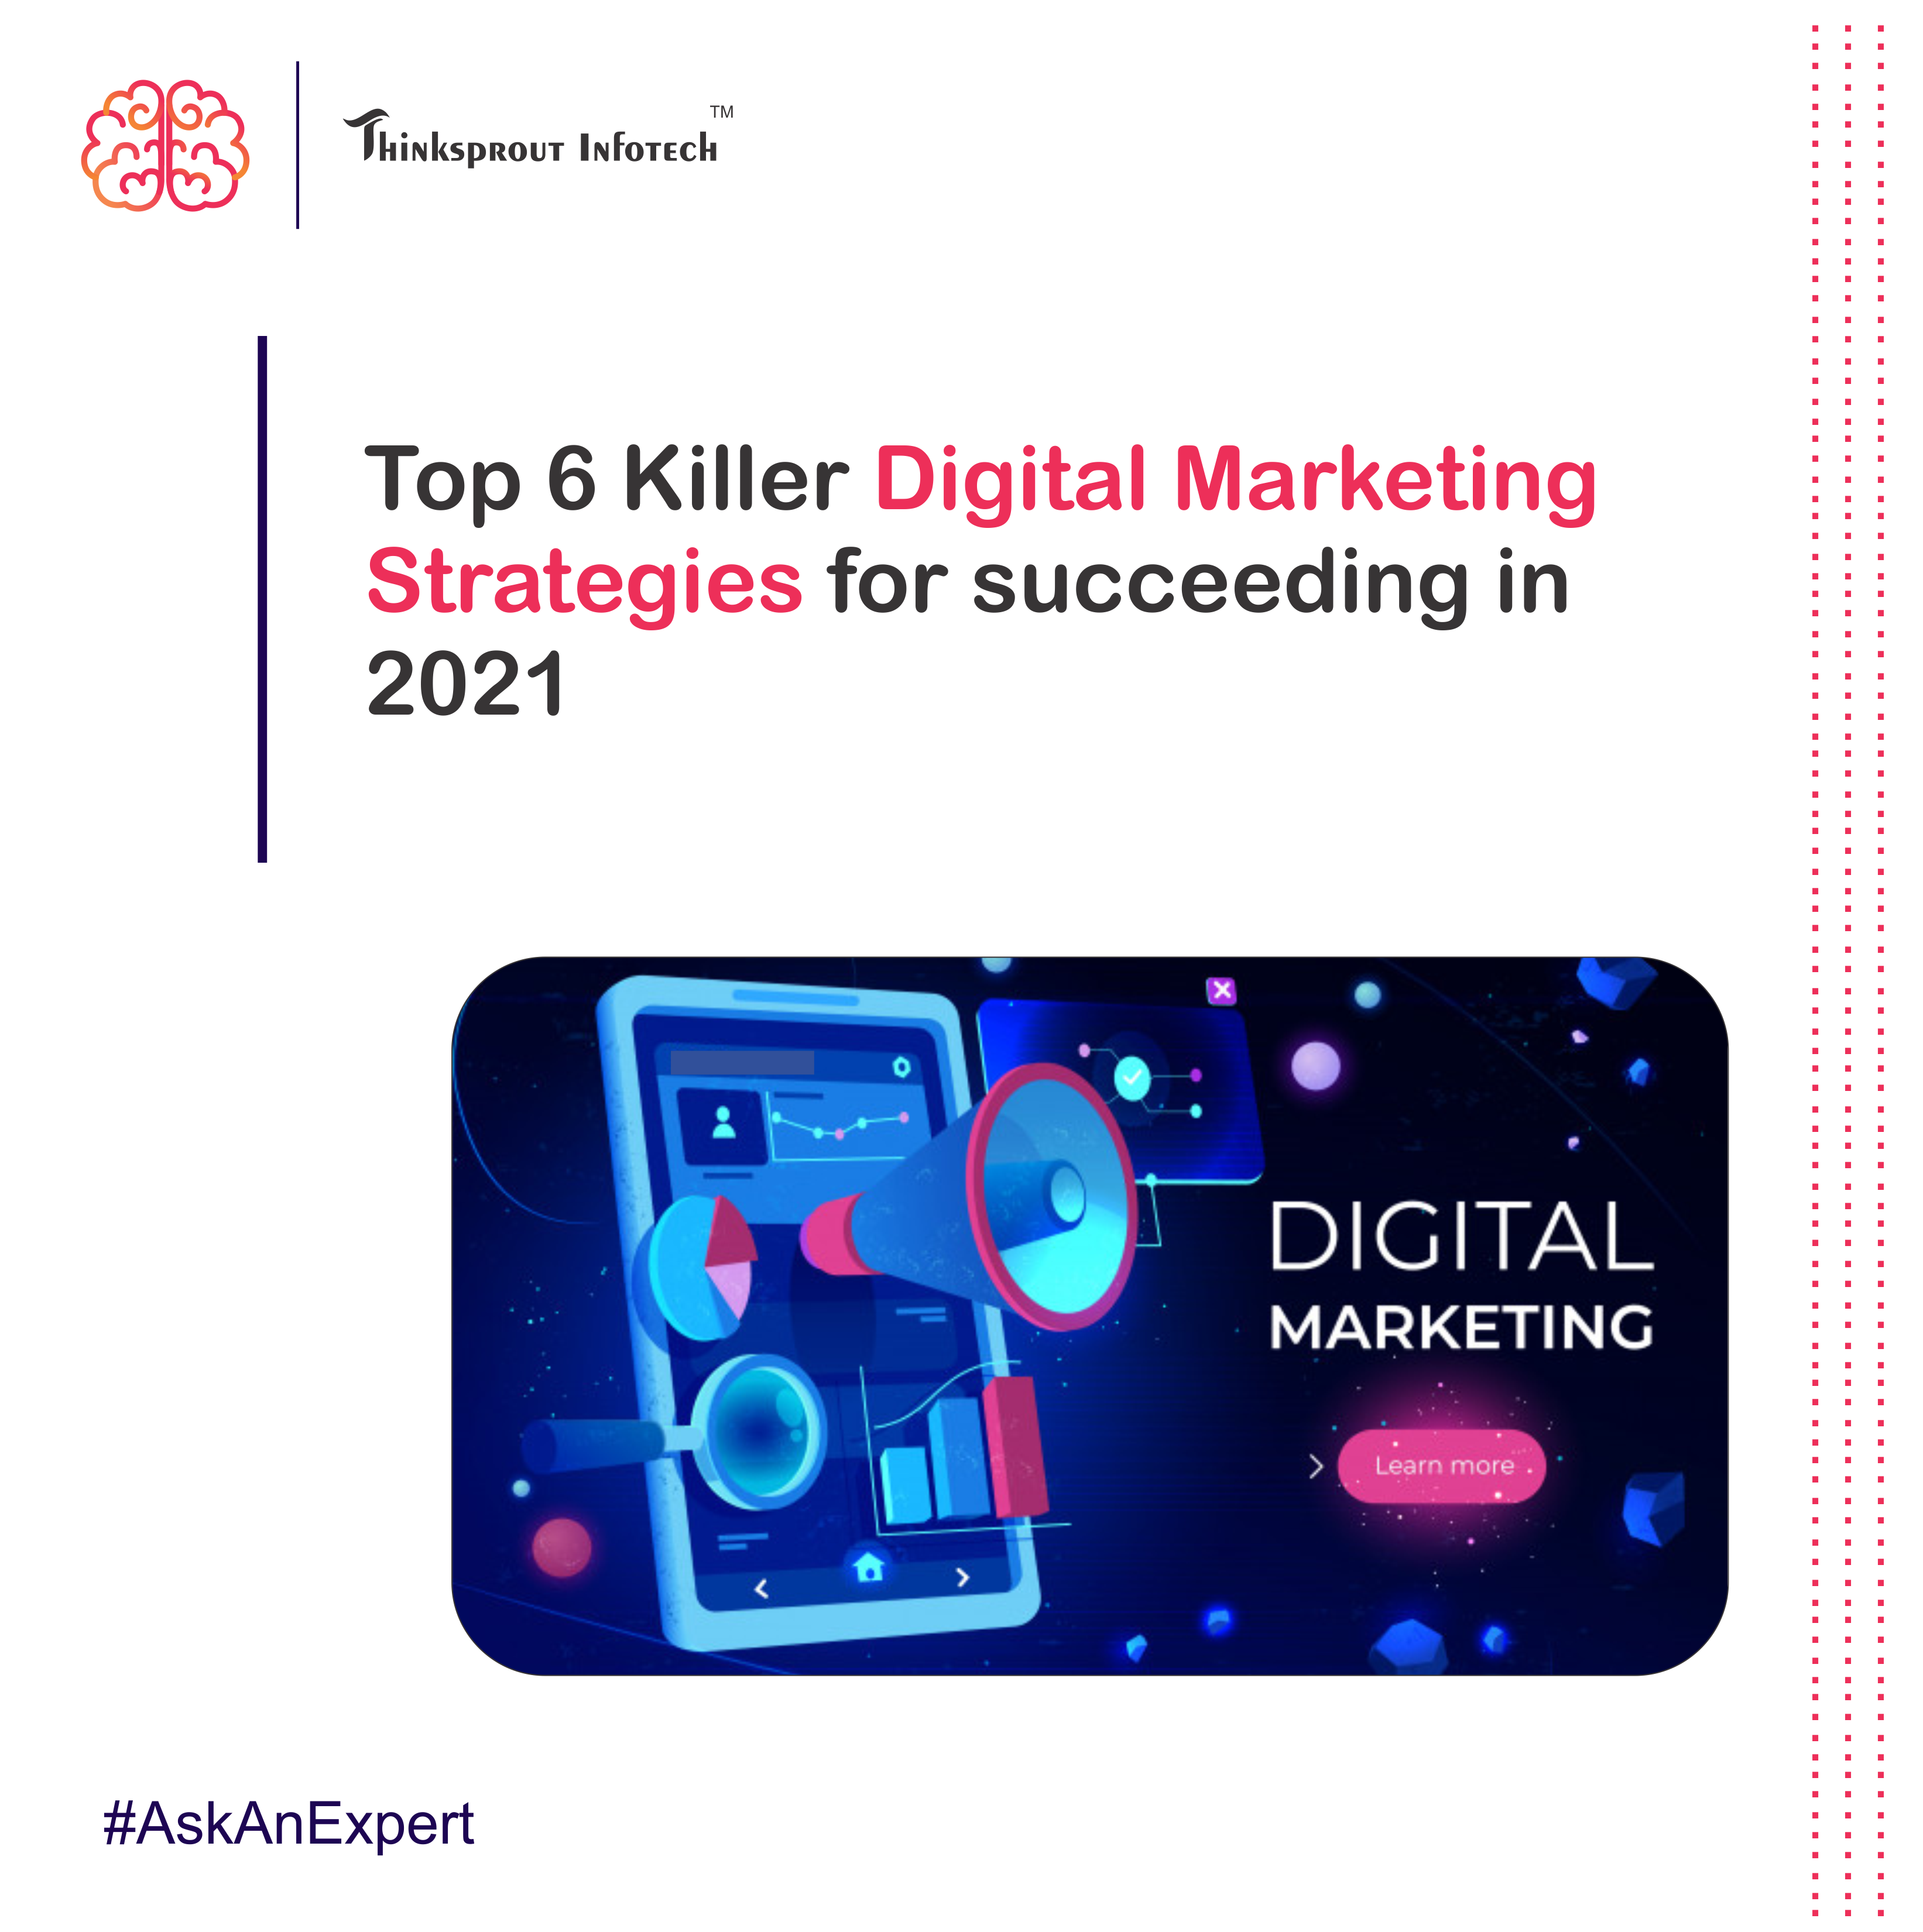 Top 6 Killer Digital Marketing Strategies for succeeding in 2021